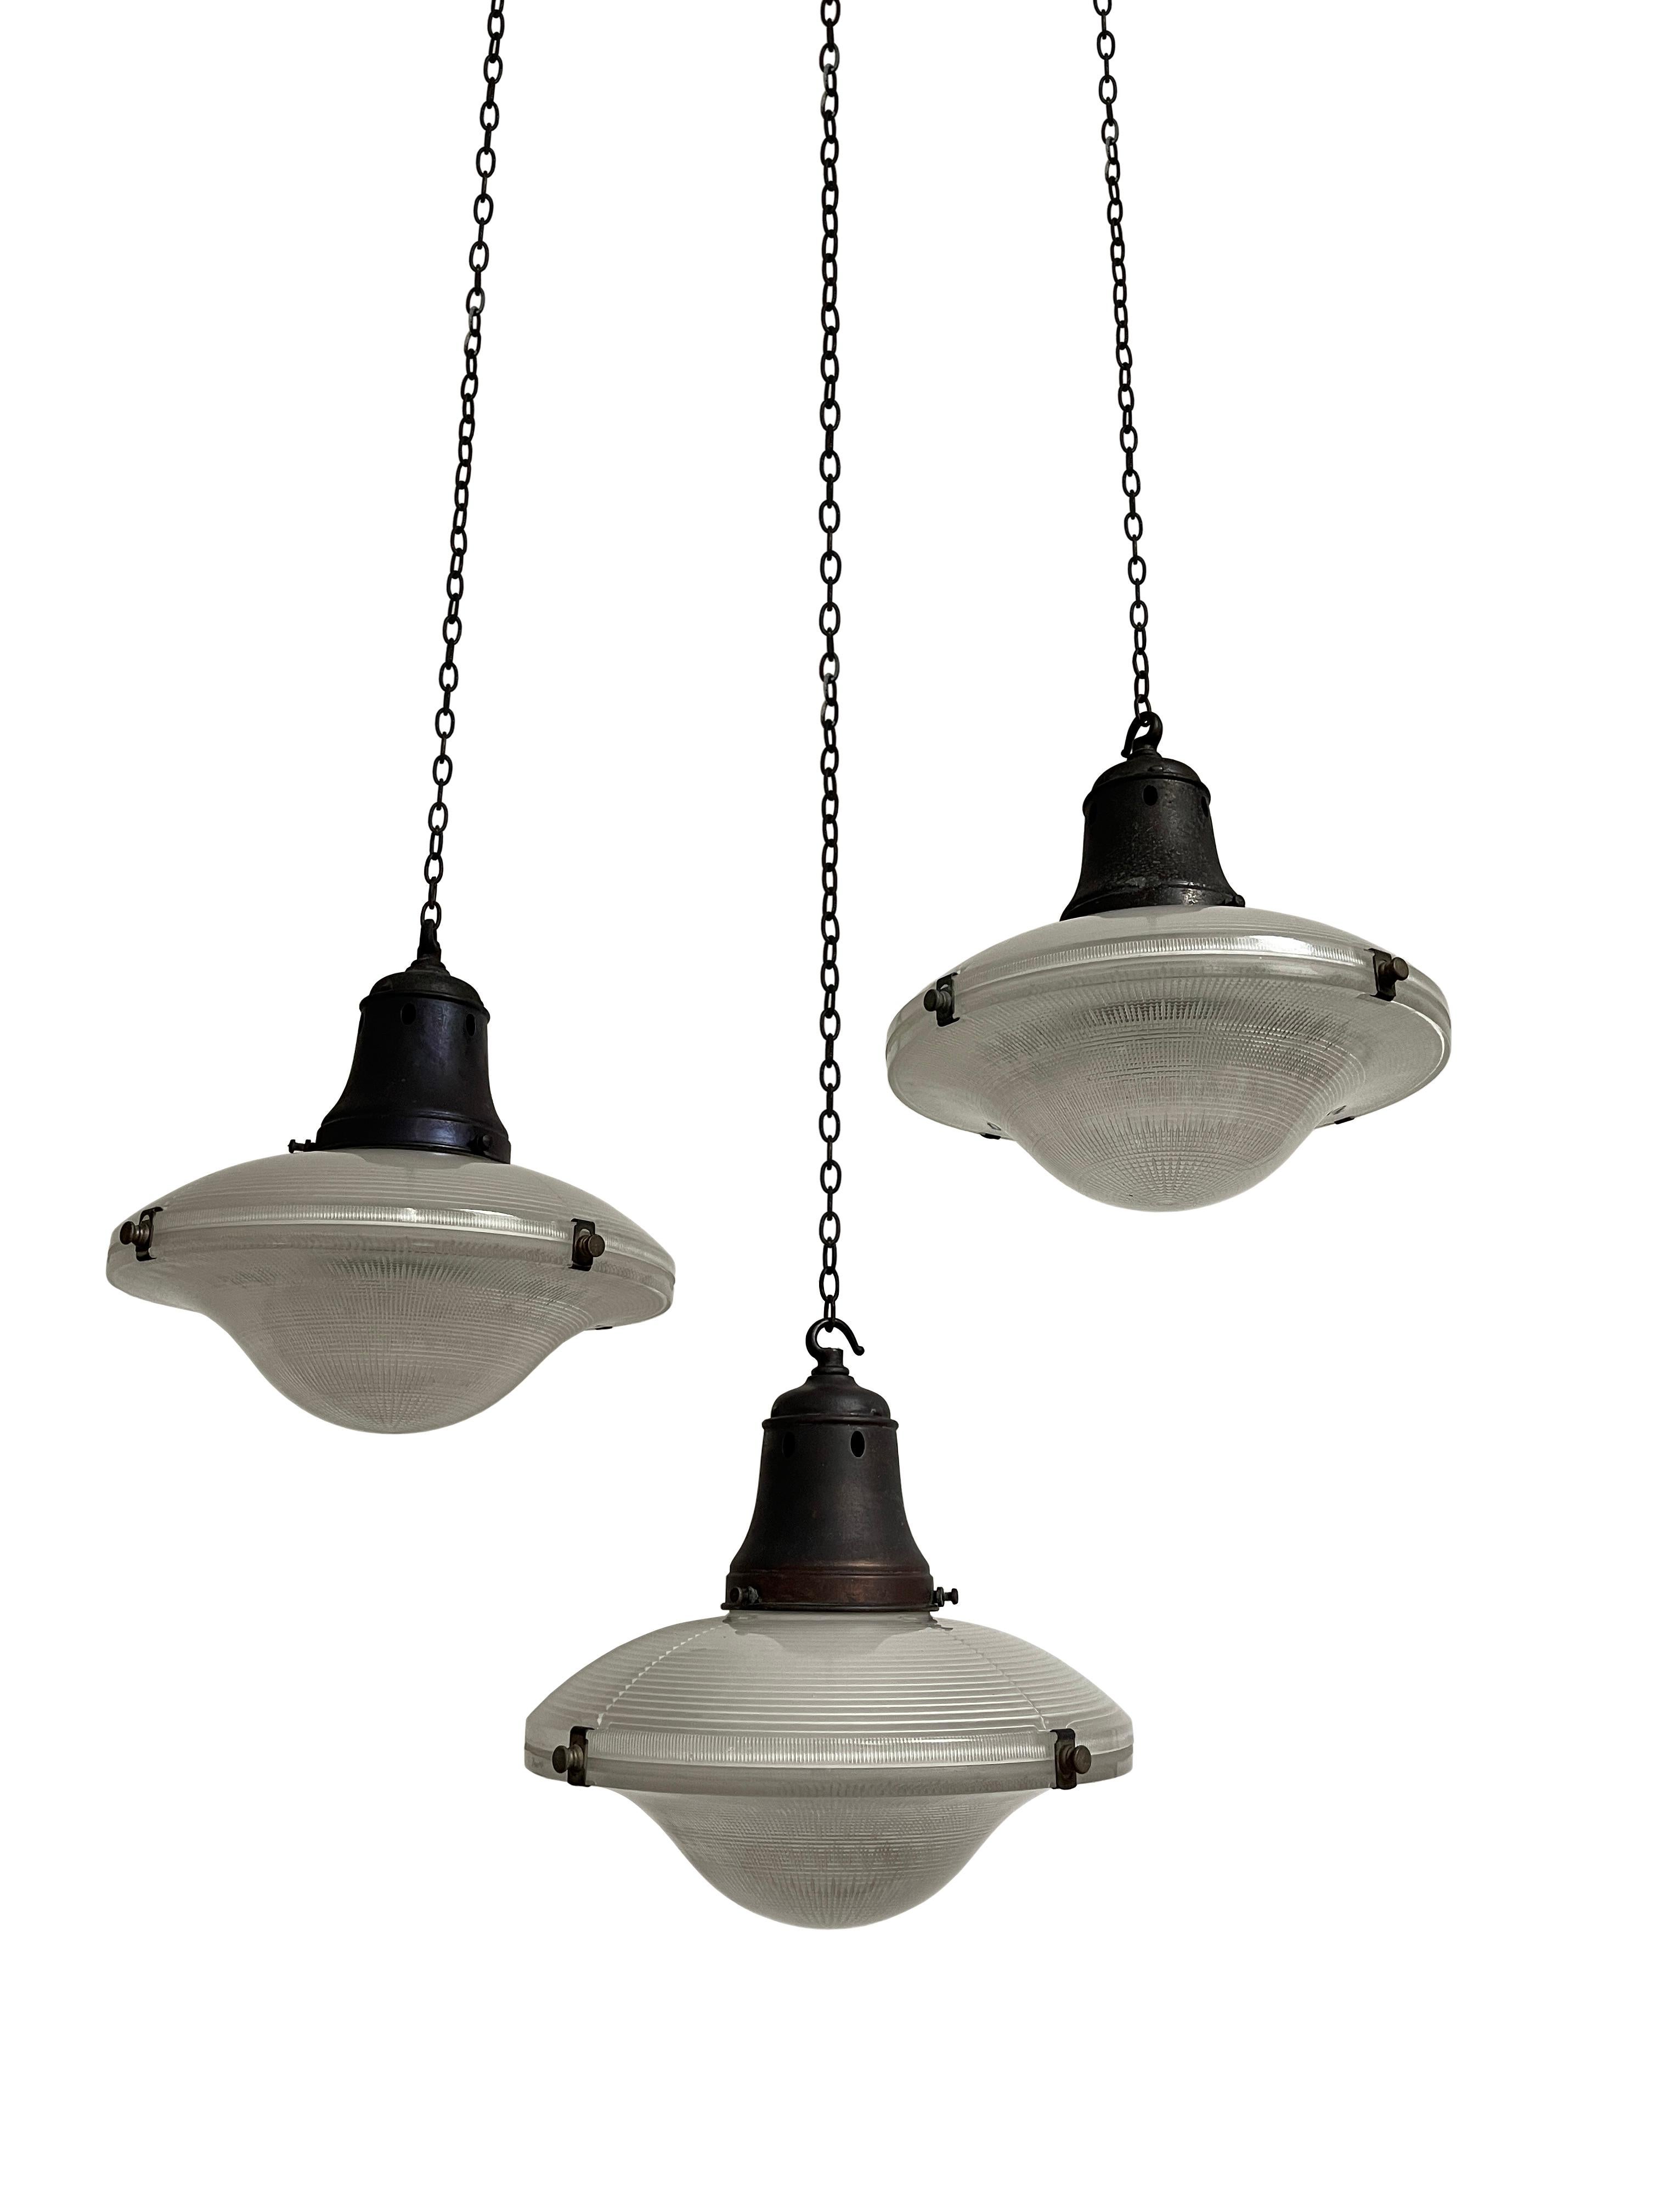 British Antique Vintage Industrial Holophane Prismatic Glass Ceiling Pendant Light Lamp